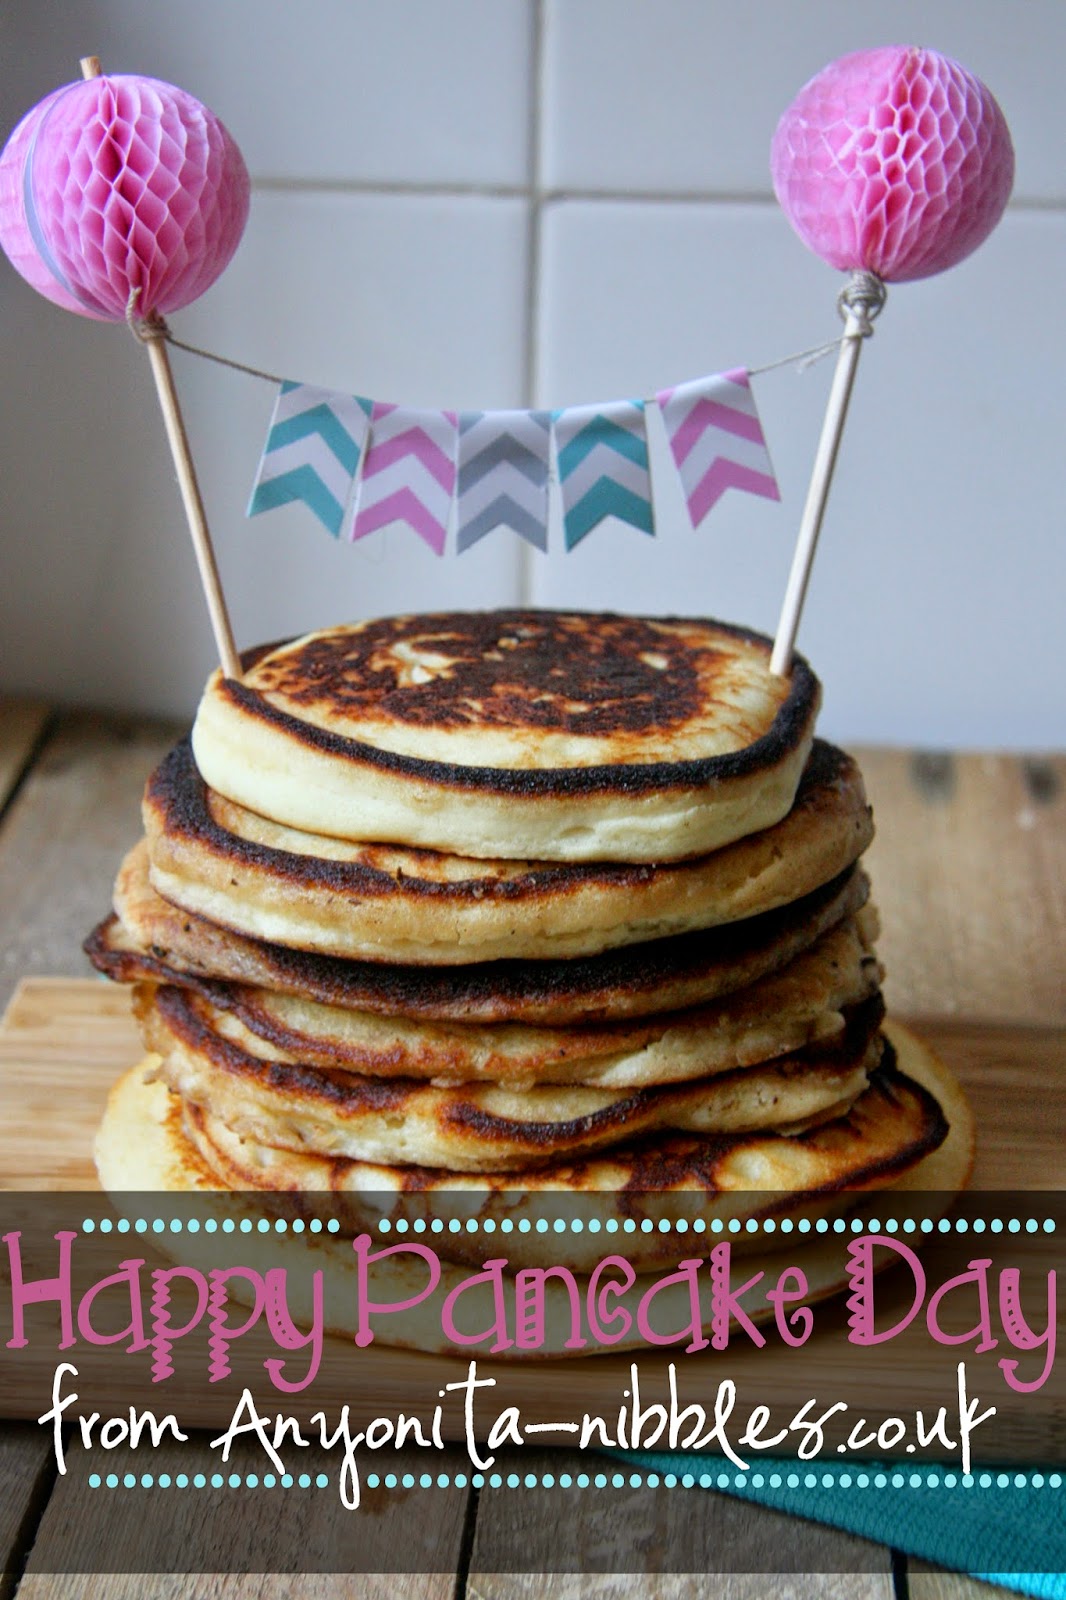 Happy Pancake Day from Anyonita-nibbles.co.uk